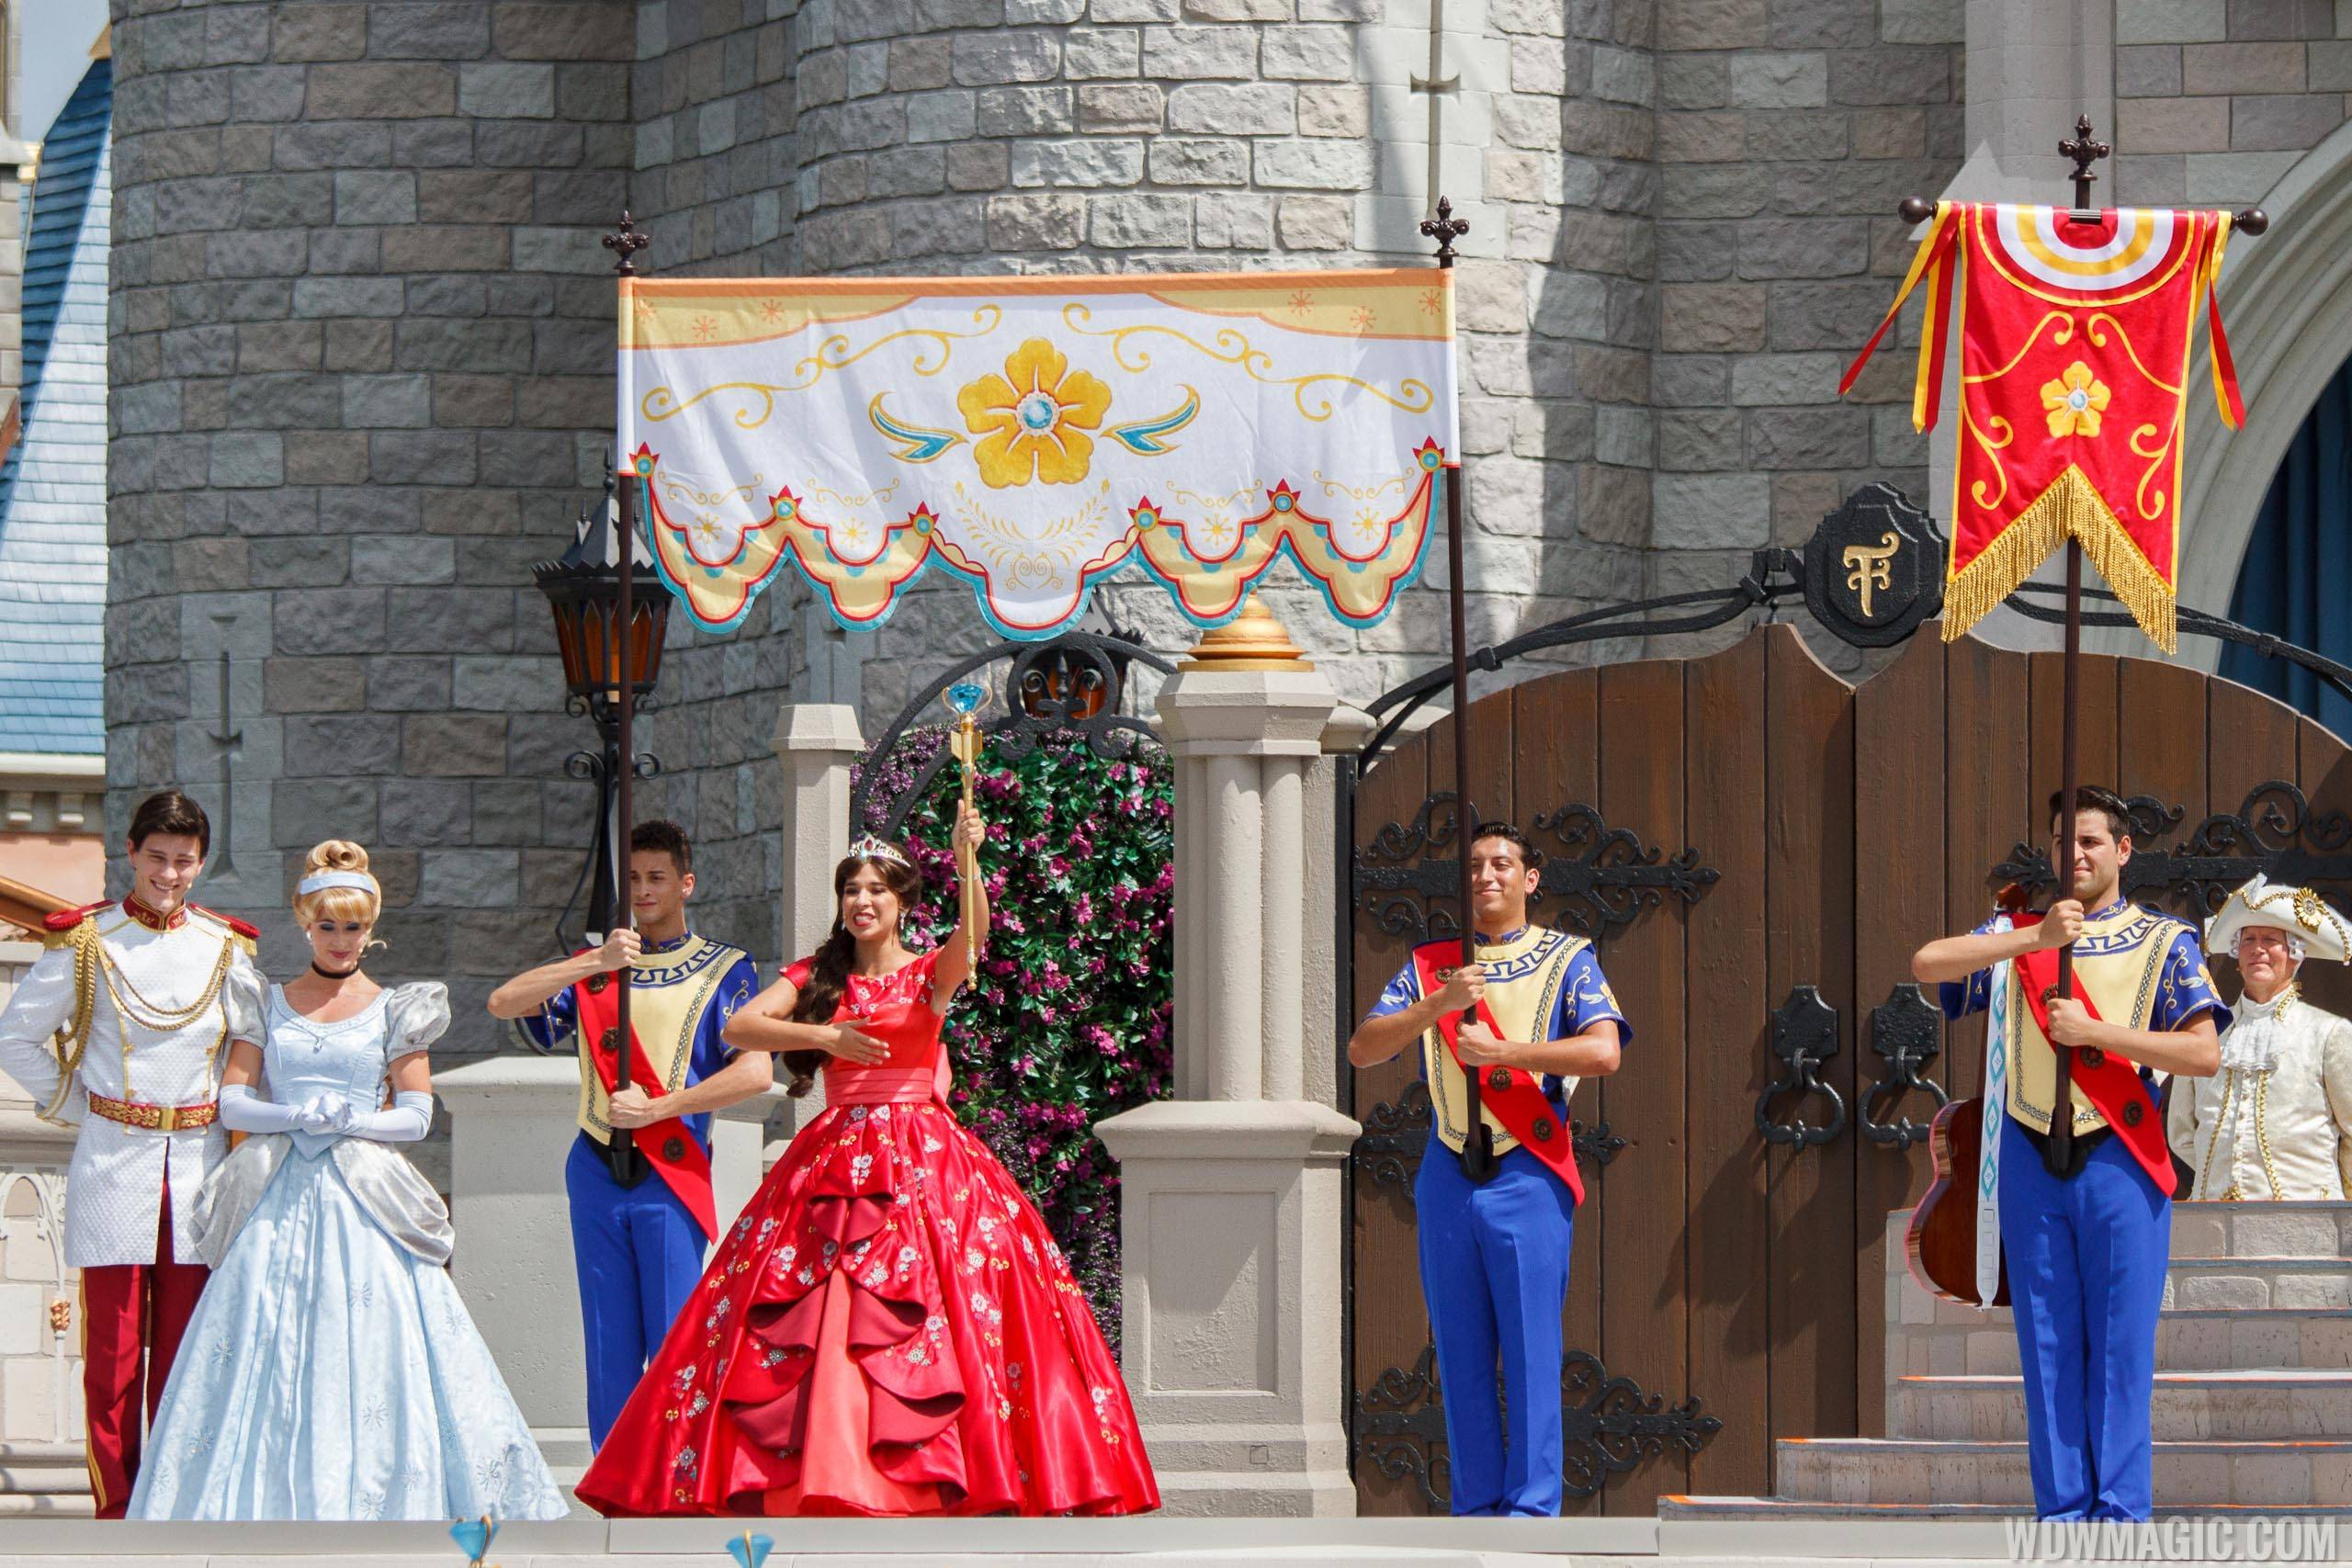 The Magic Kingdom welcomes Princess Elena of Avalor